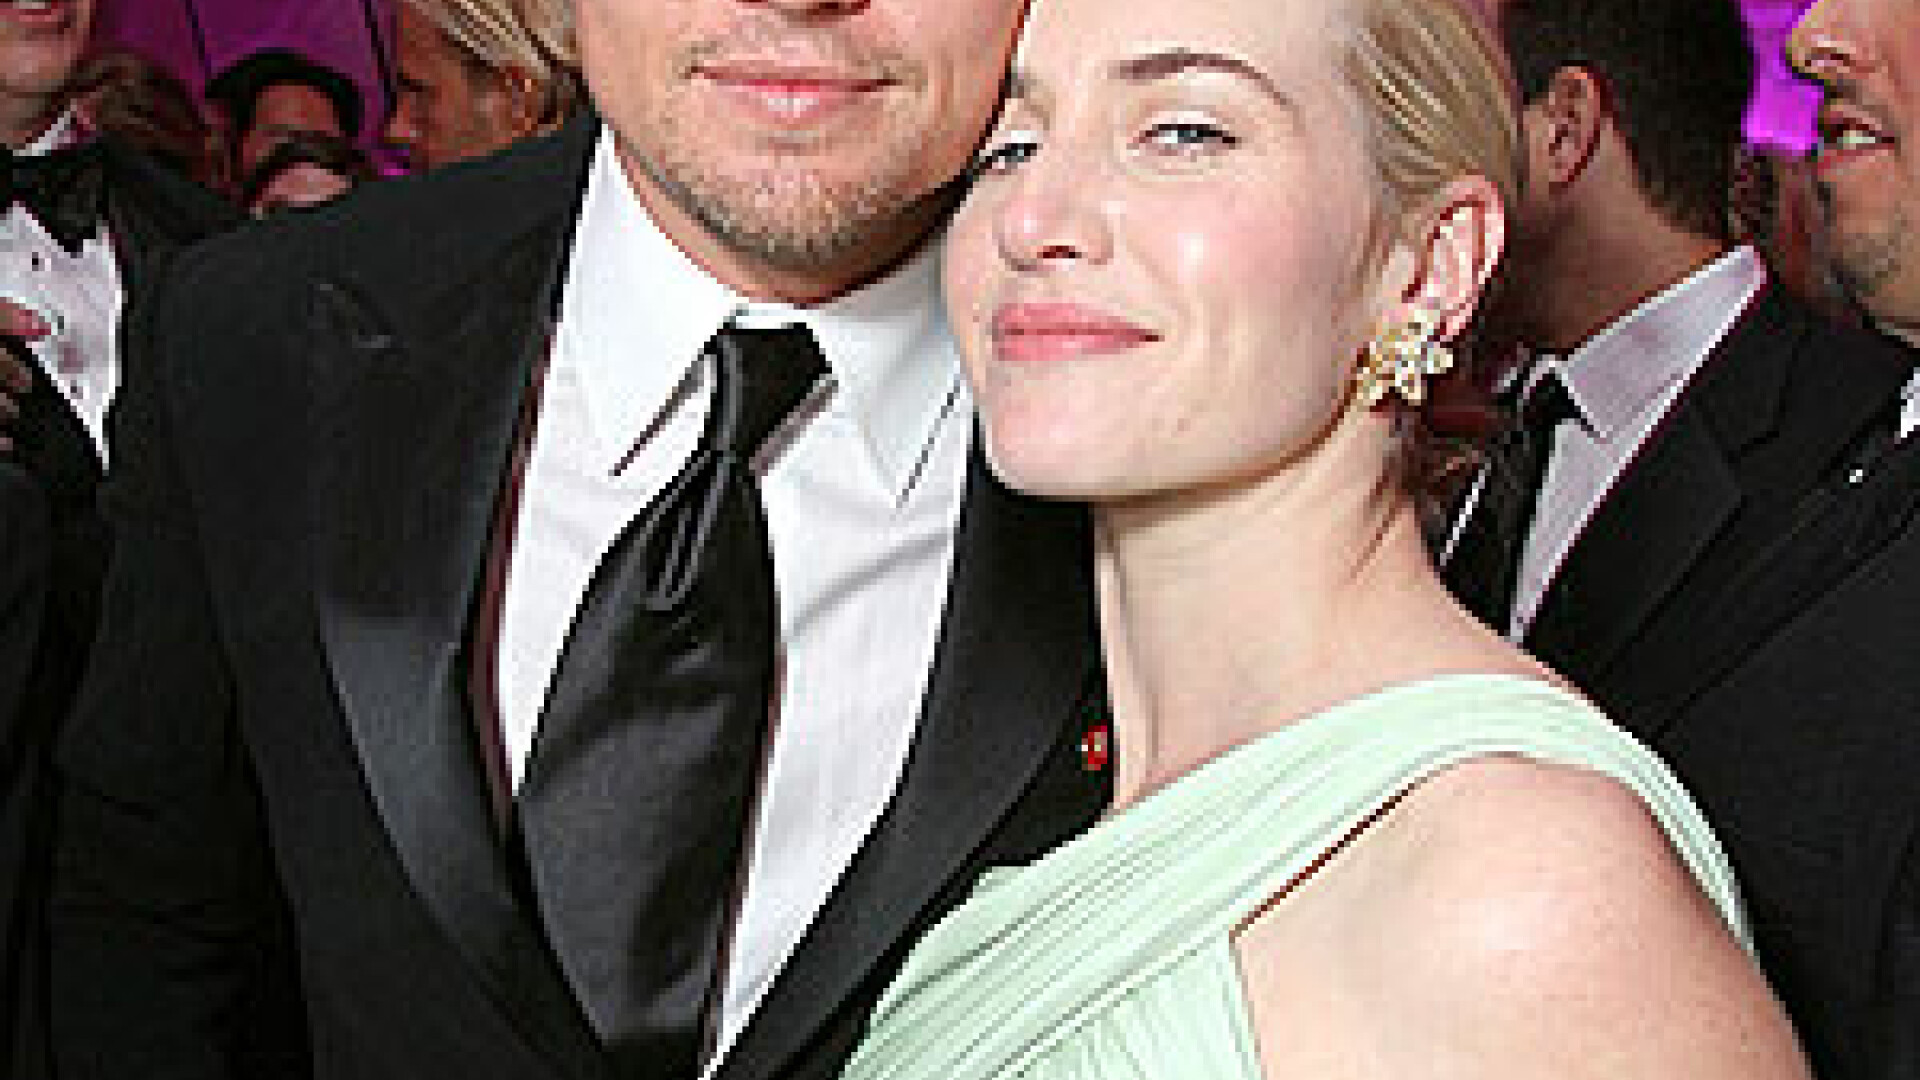 Kate Winslet, Leonardo DiCaprio